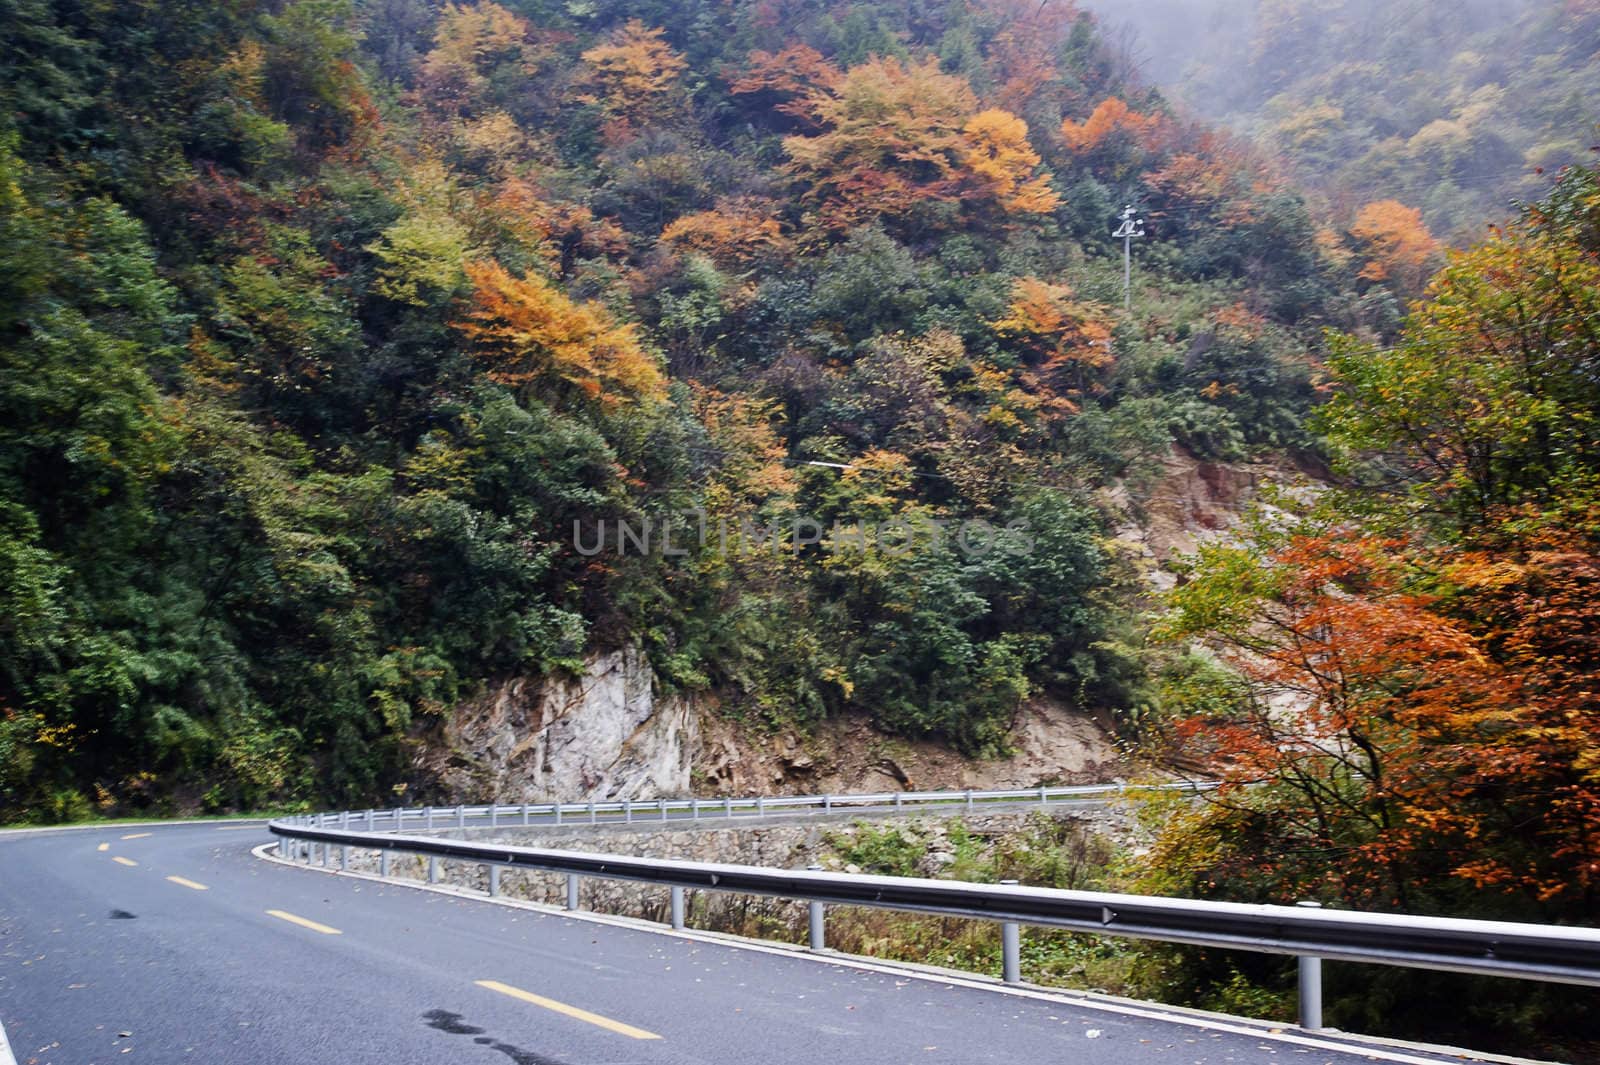 Beautiful autumn landscape in Shennongjia Mountains, Hubei, China by xfdly5